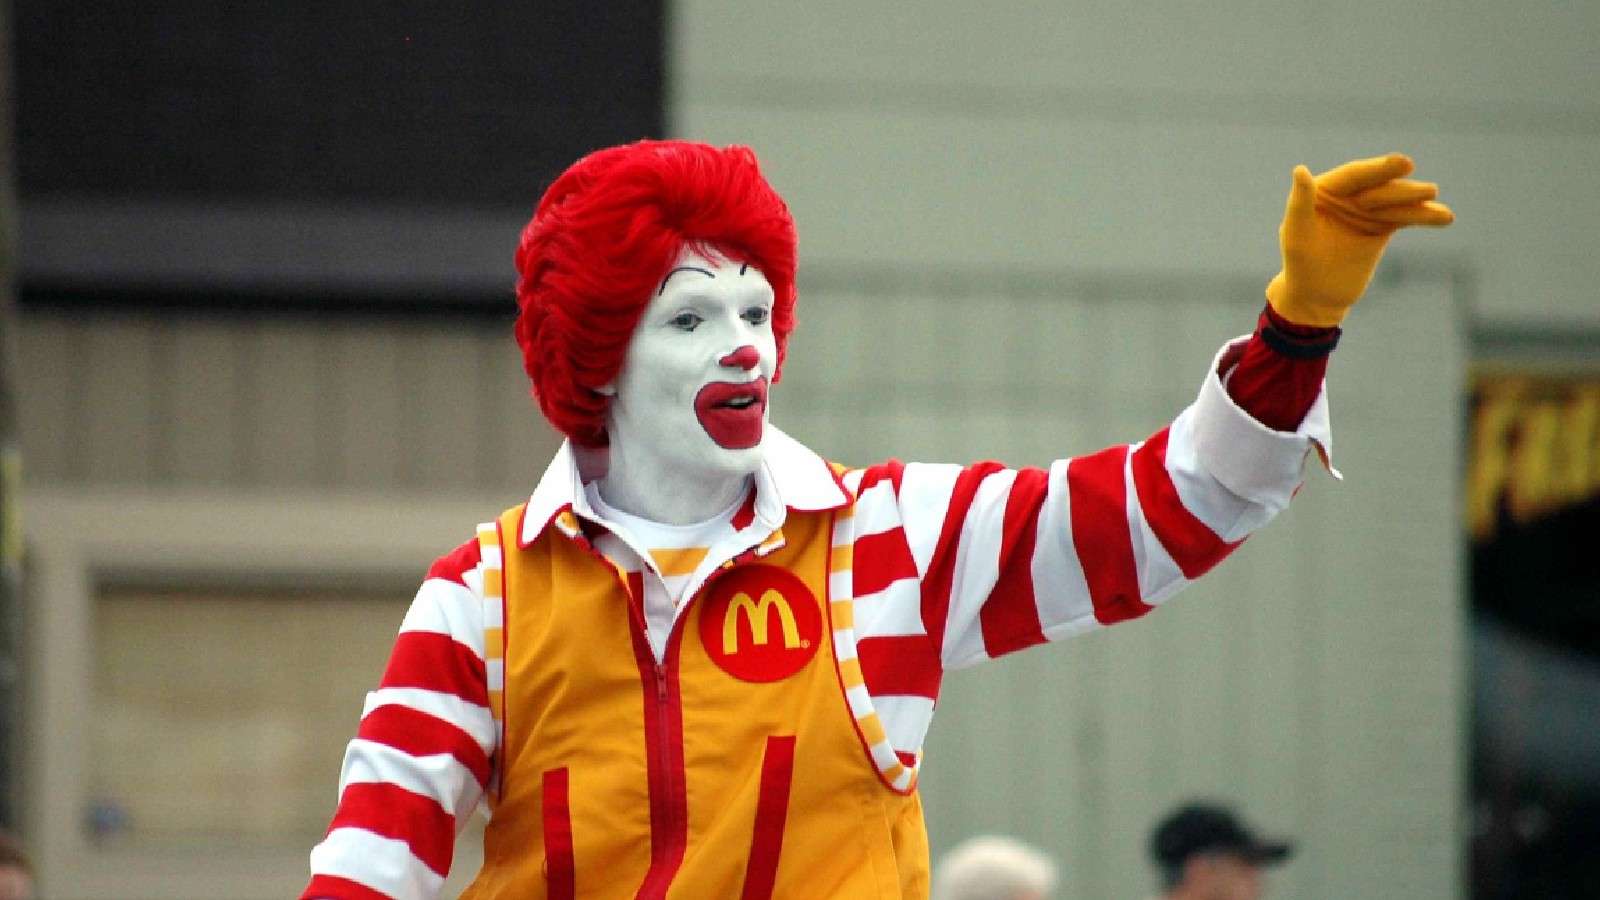 Image of McDonald's mascot, Ronald Mcdonald.